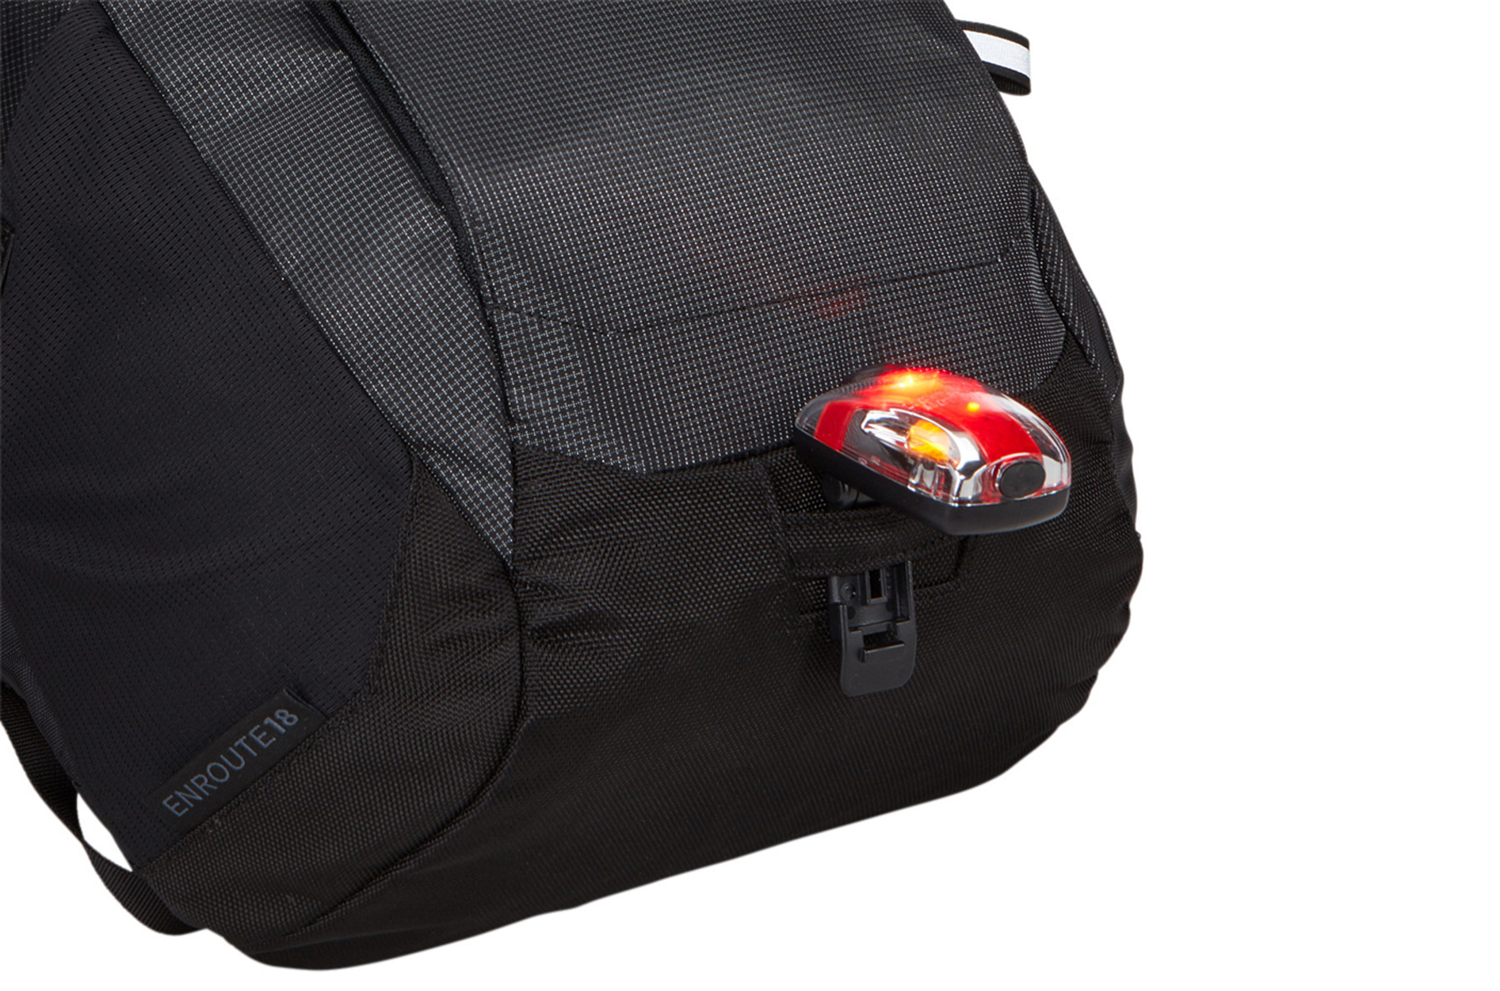 Рюкзак THULE EnRoute Backpack 18L Black